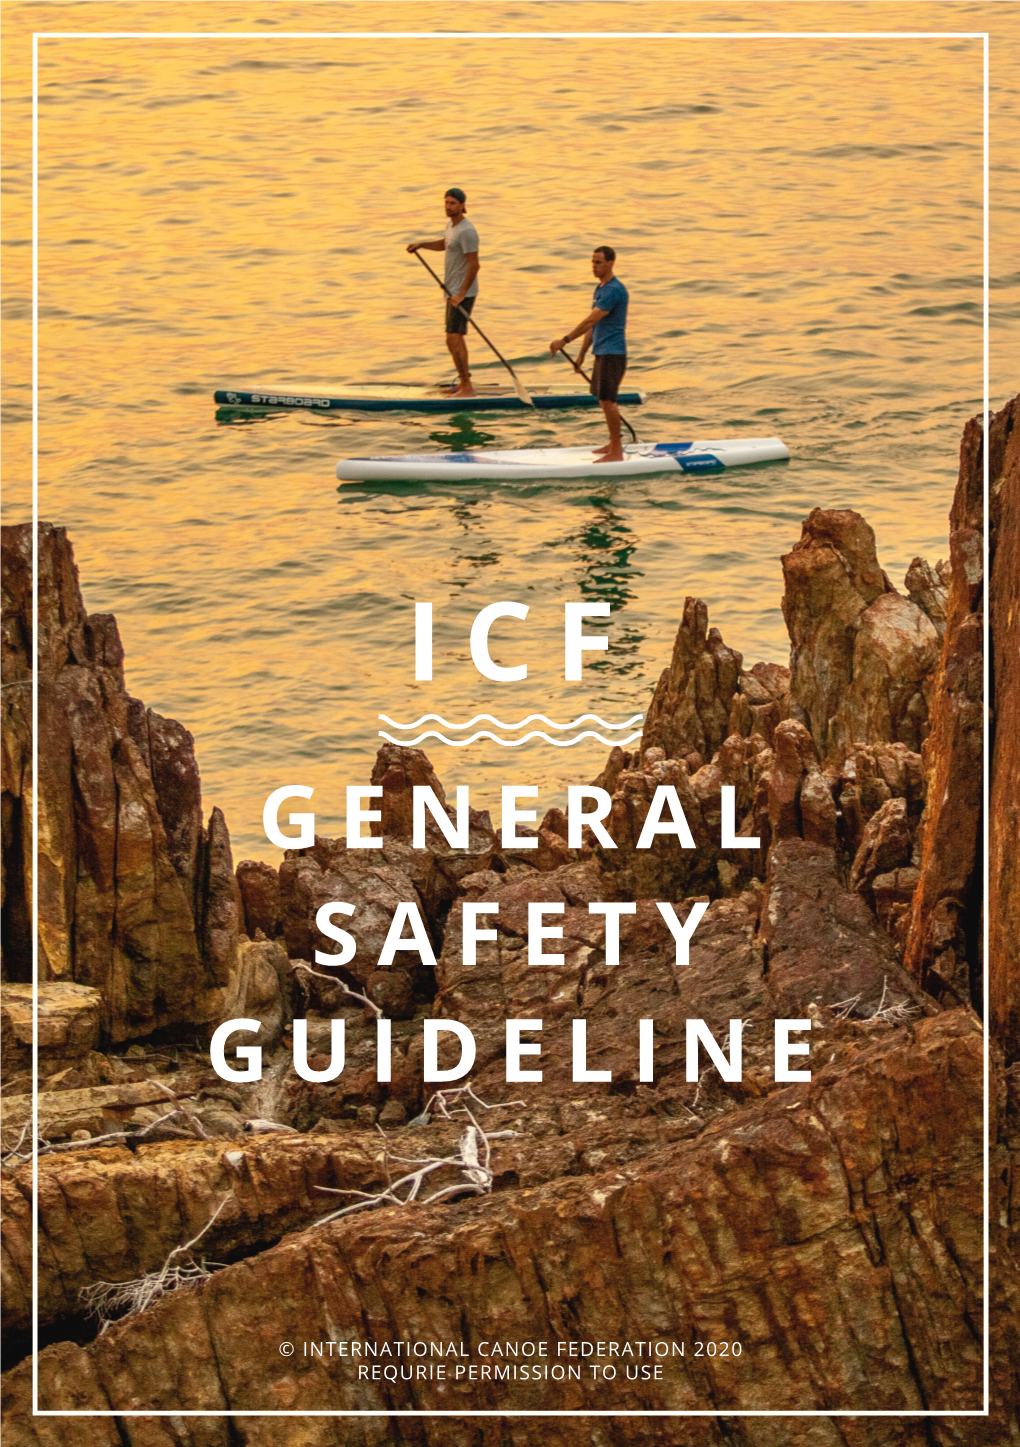 General Safety Guideline